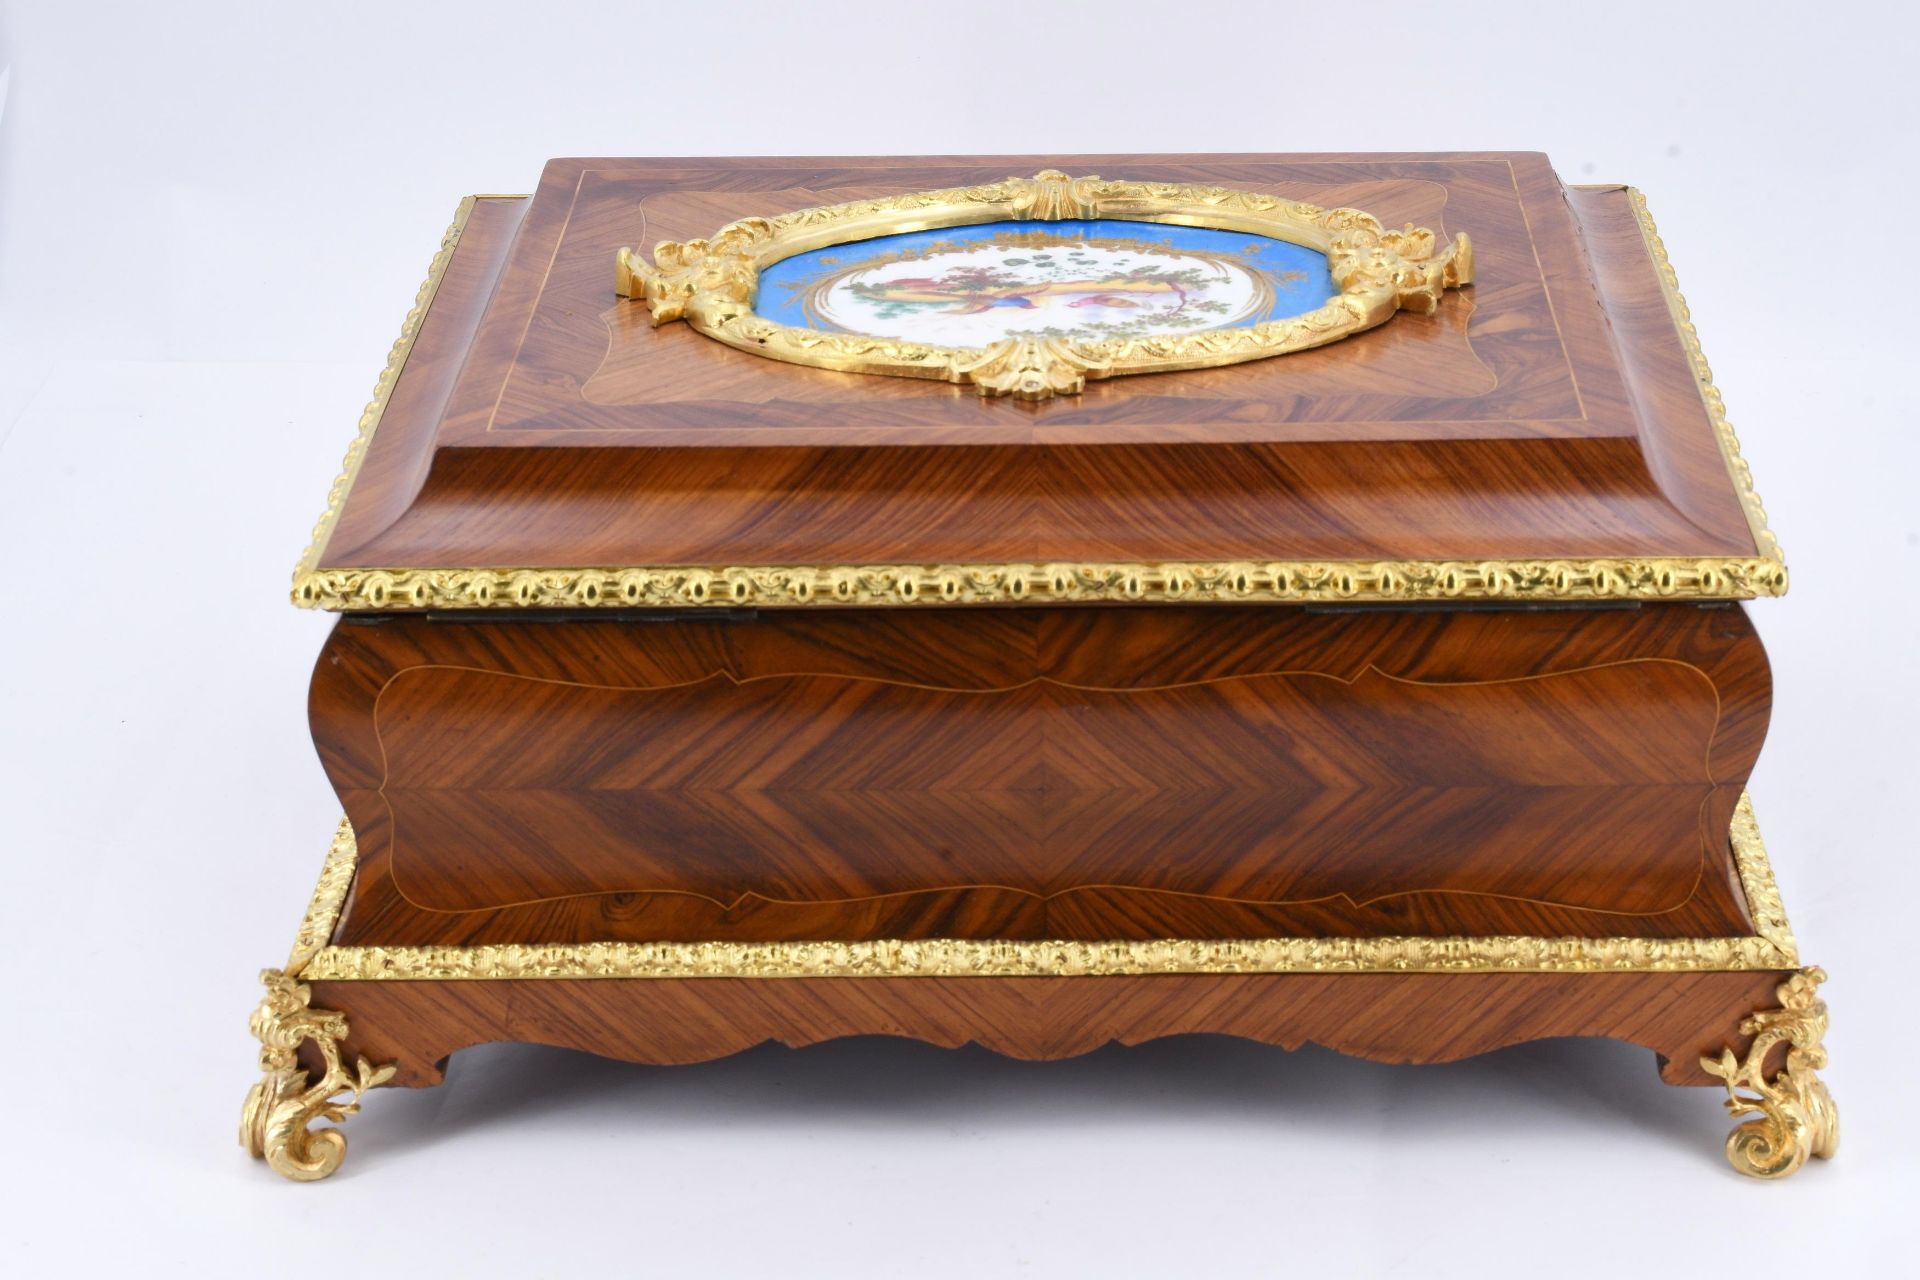 Magnificent casket with bird décor - Image 6 of 7